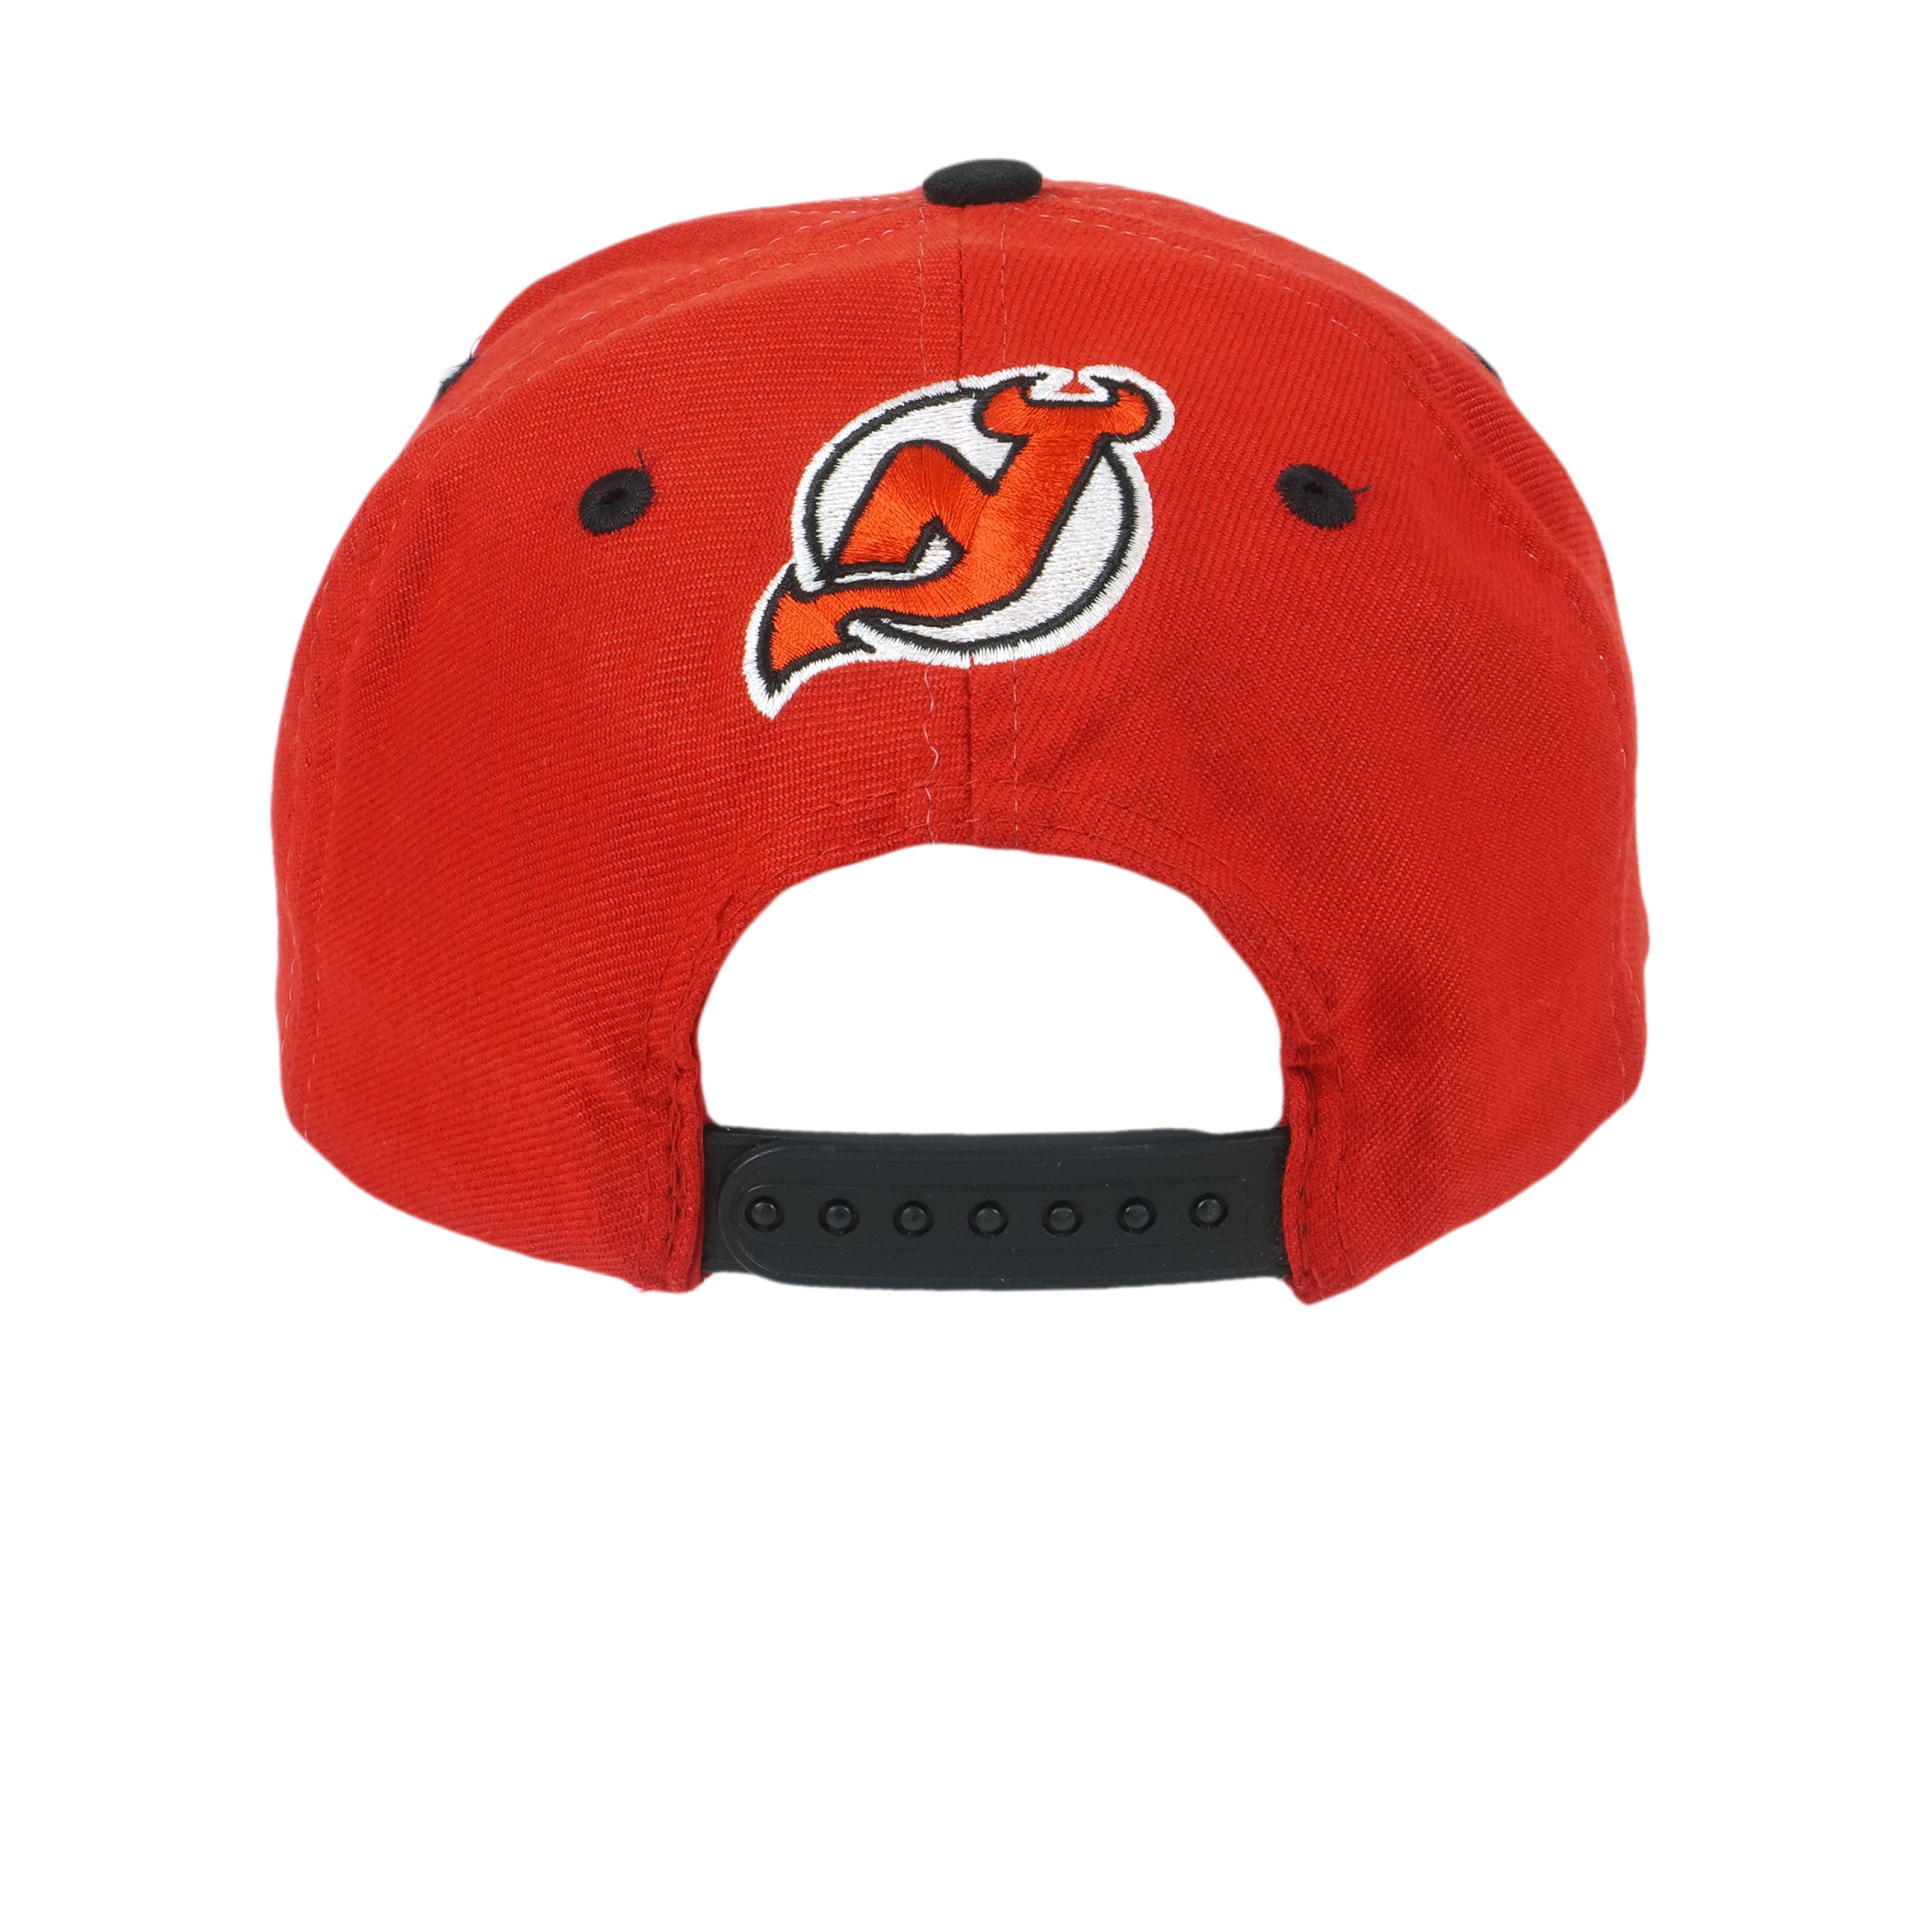 Vintage New Jersey Devils Snapback Hat Starter OSFA NHL Hockey 